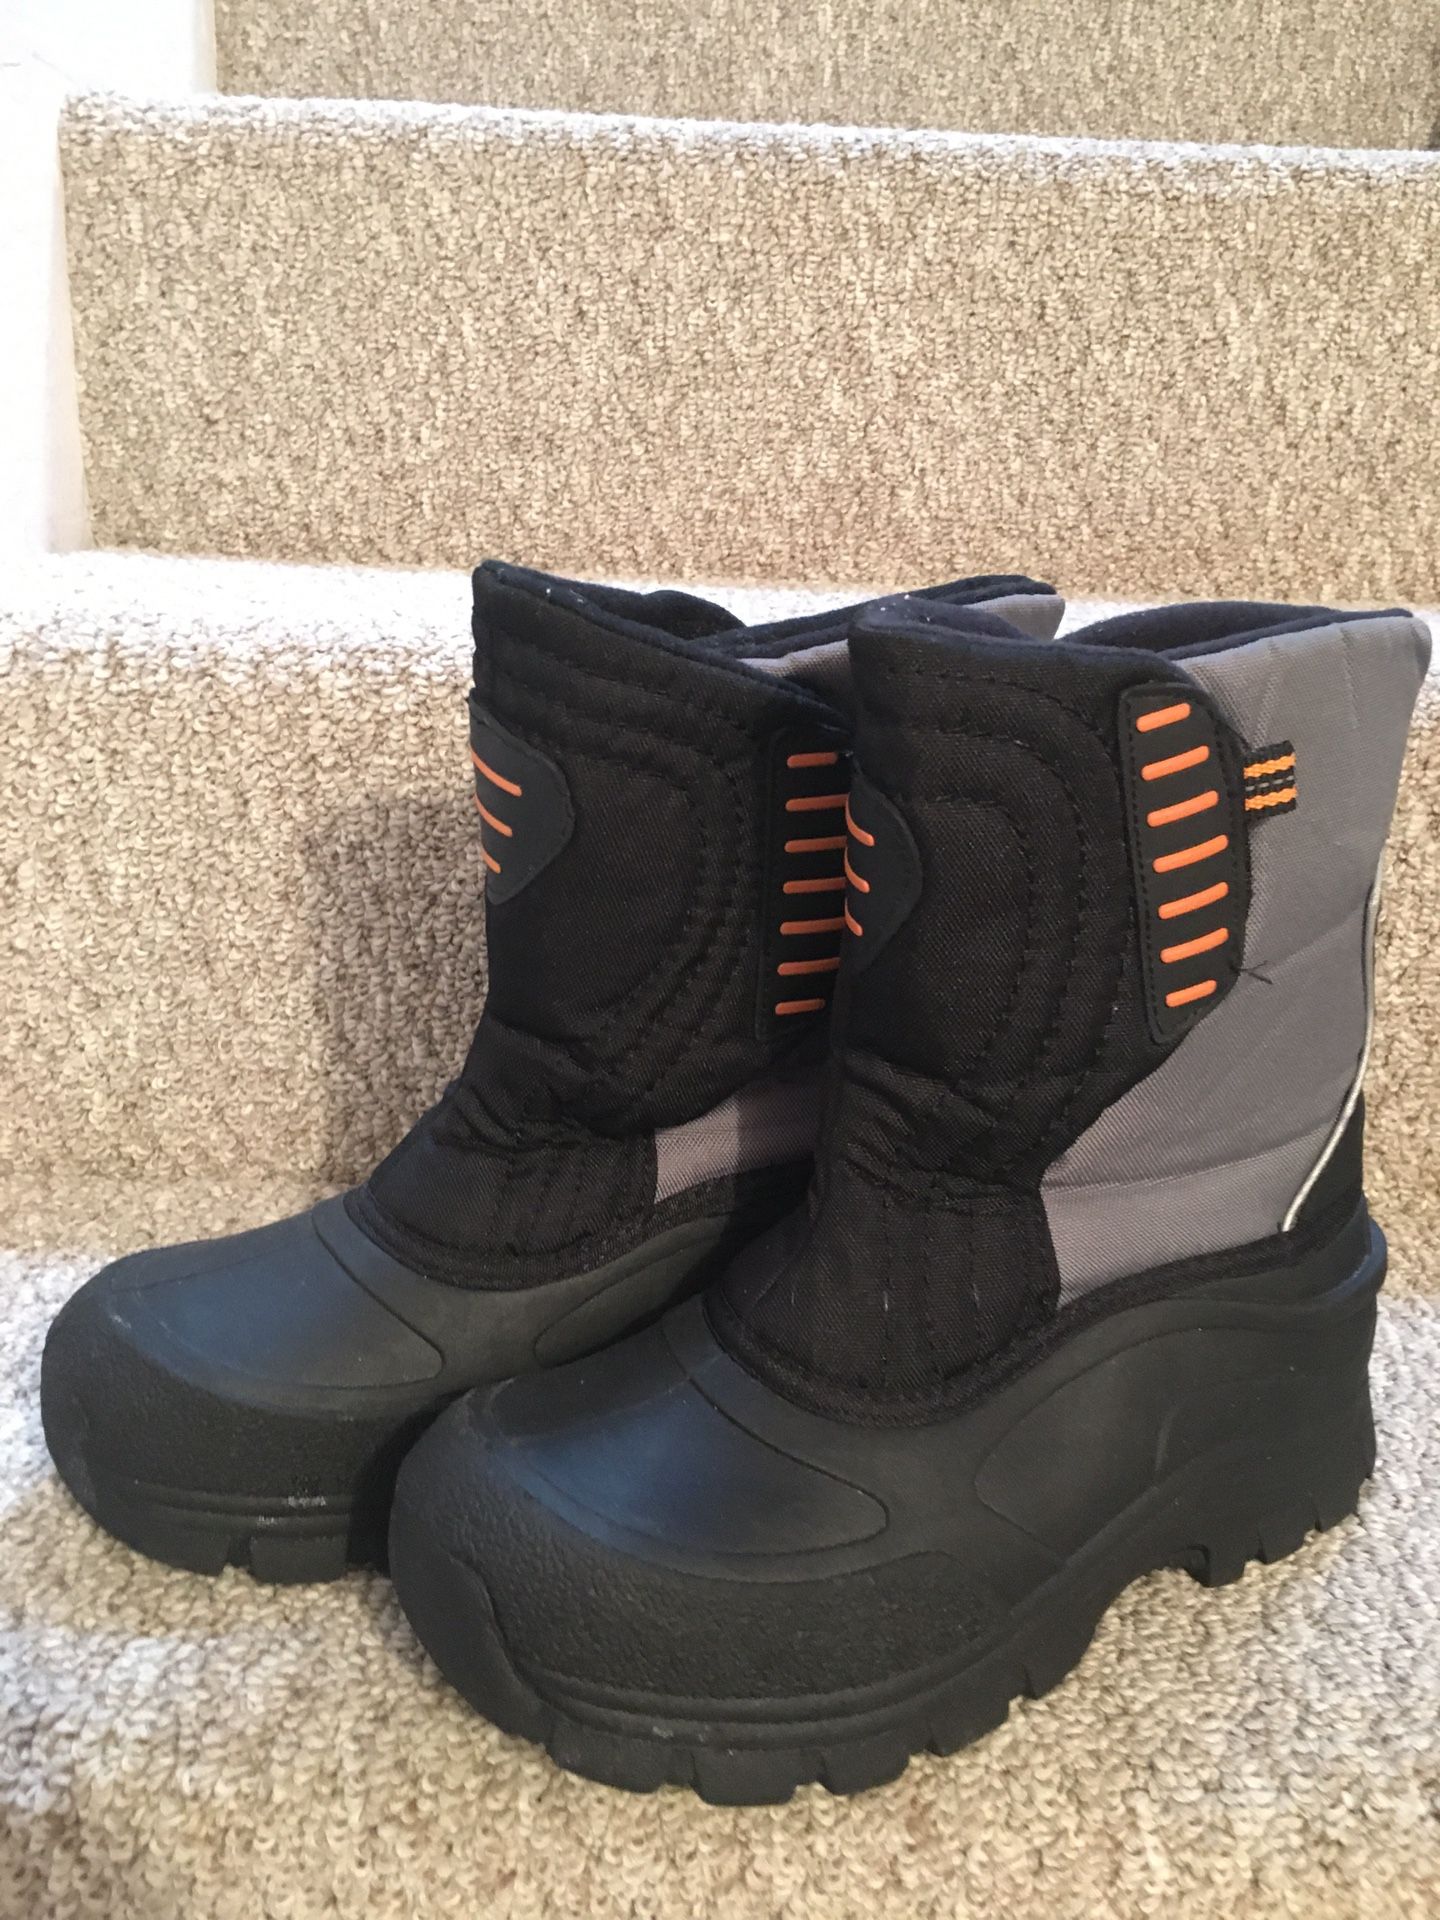 Snow boots, adult/big kid size 5